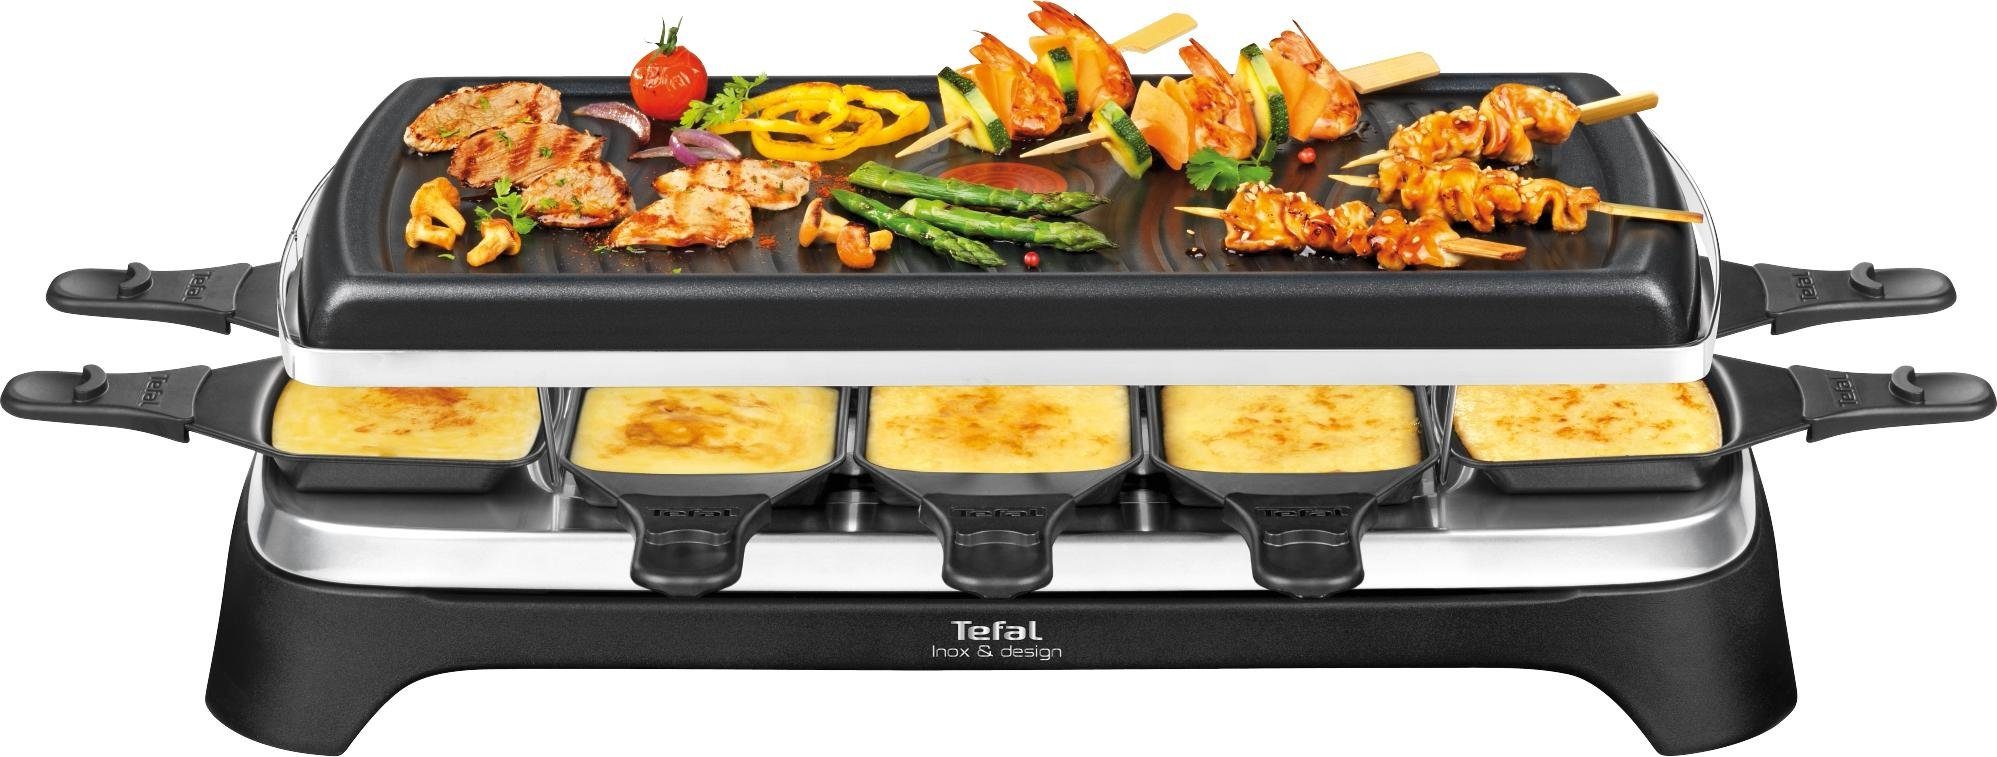 Schurk Veronderstelling arm Tefal Raclette RE4588 Ambiance koop je bij | OTTO